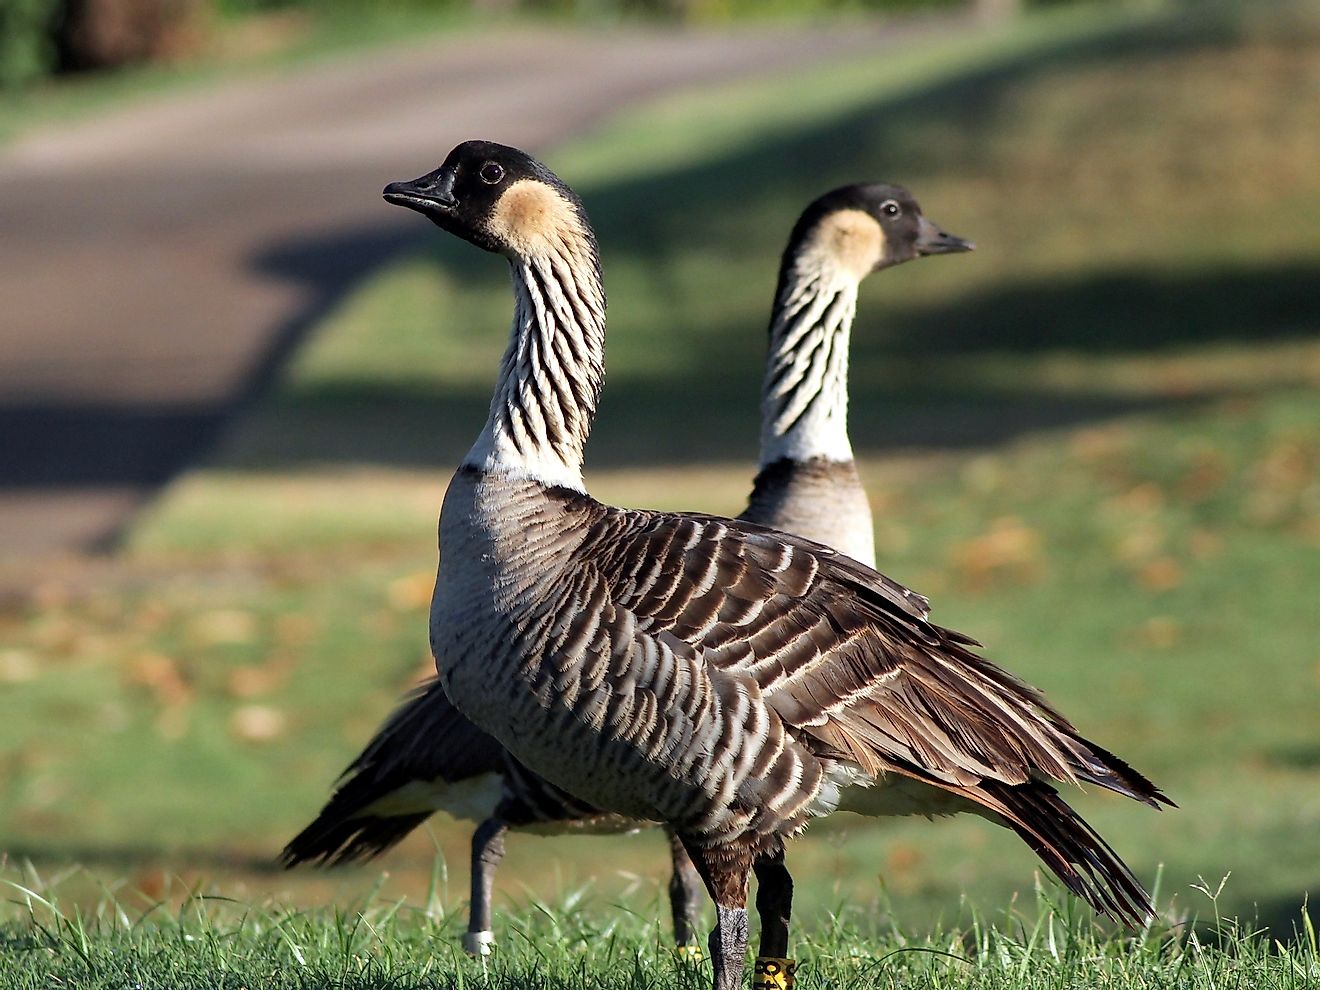 A pair of Hawaiian Geese (Nene) in Kauai. Image credit: Randy Bjorklund/Shutterstock.com